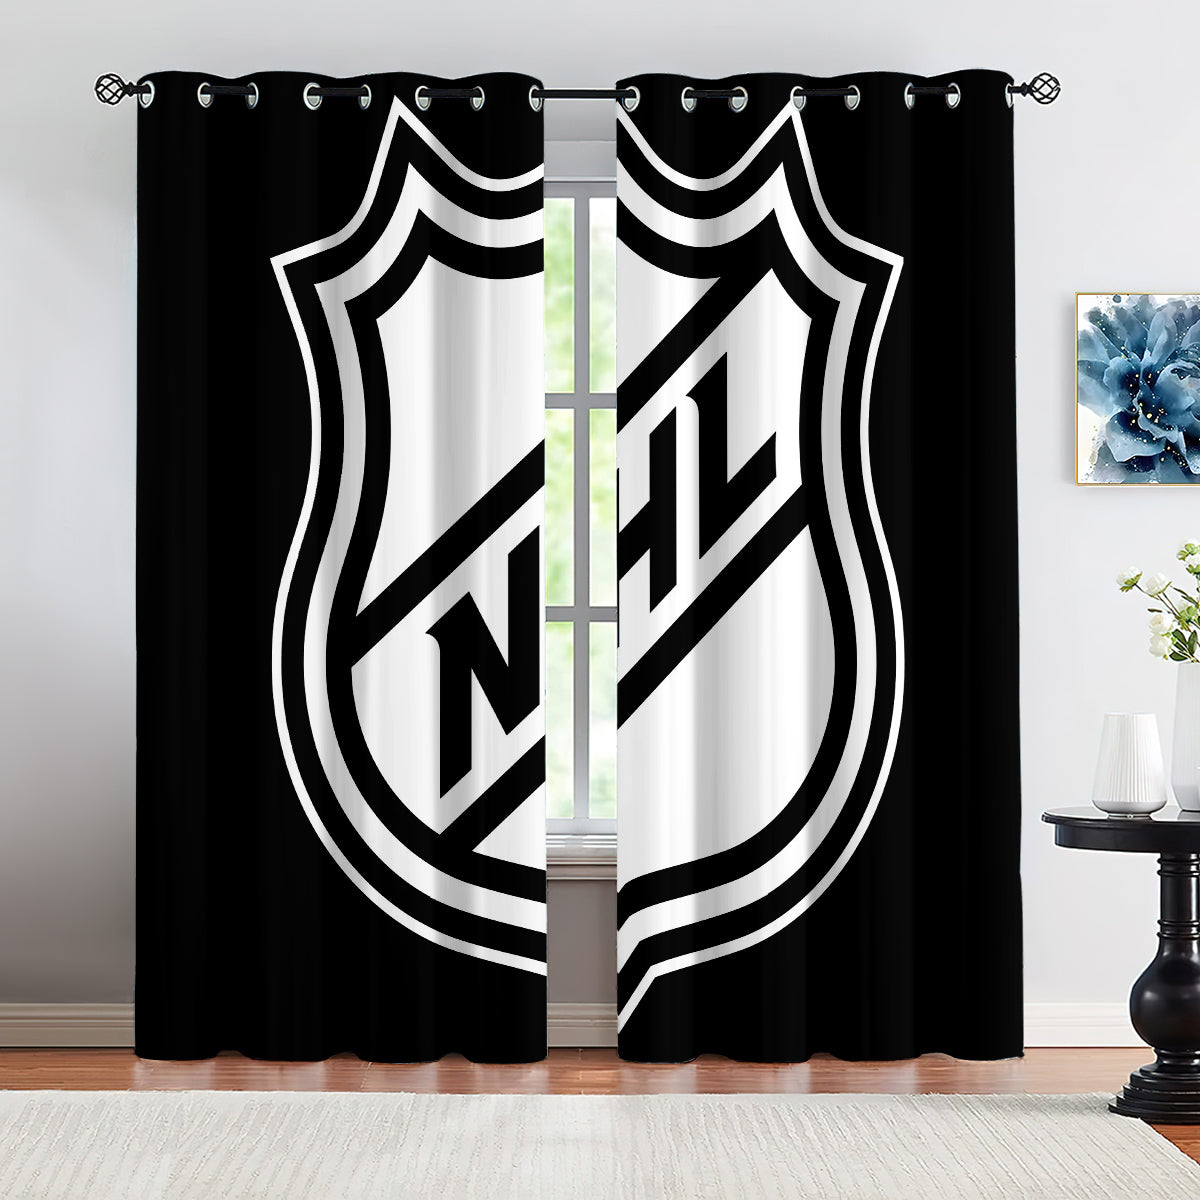 Hockey League Logo Blackout Curtains Drapes For Window Treatment Set